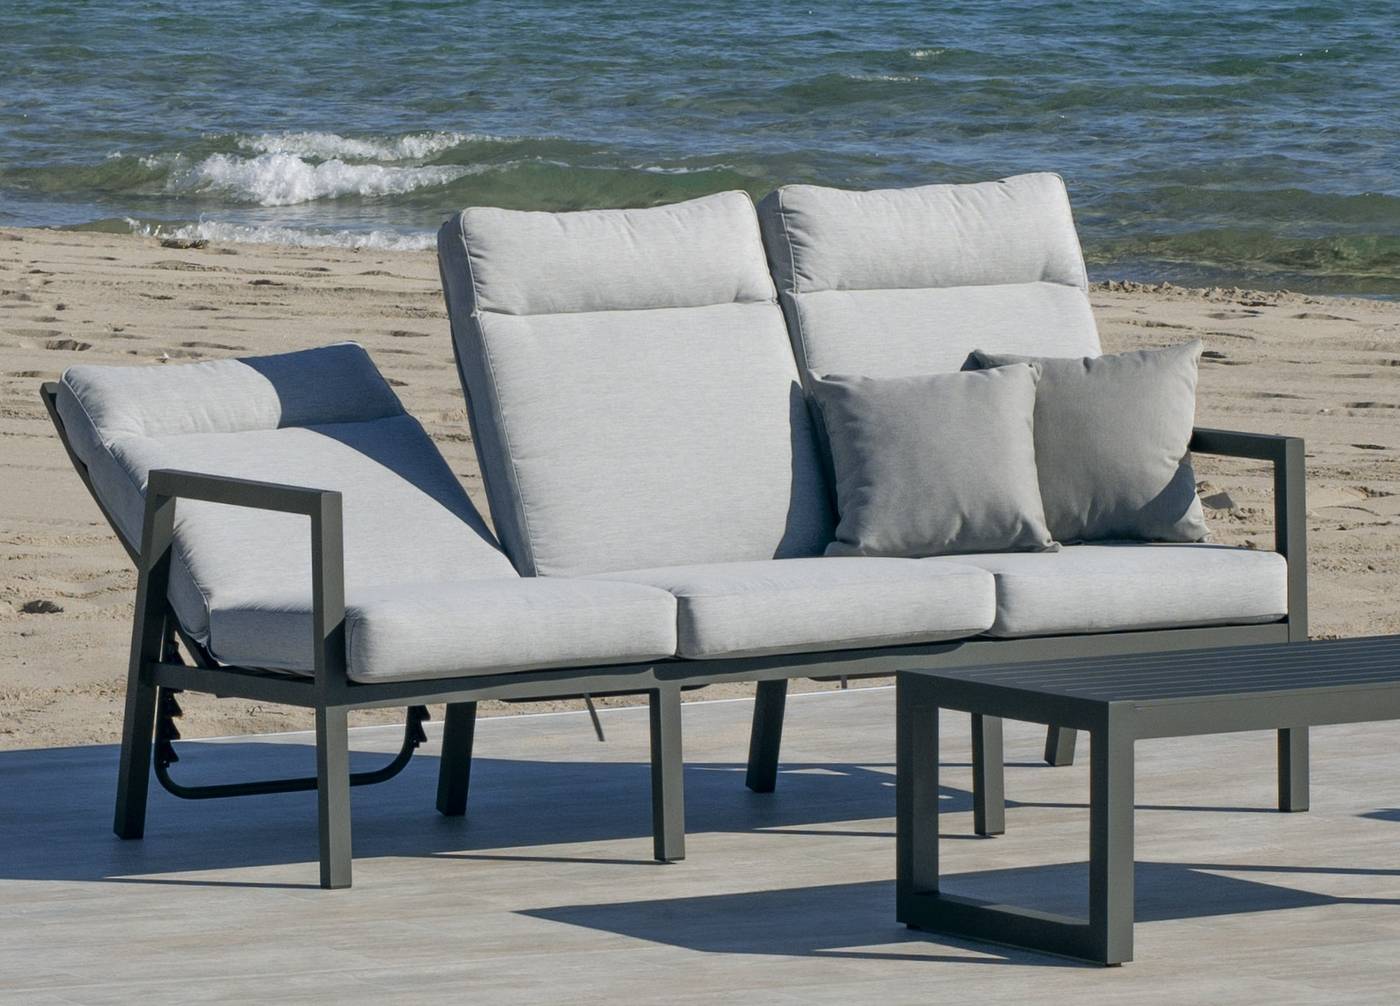 Set Aluminio Voriam-11 - Conjunto aluminio: sofá 3 plazas + 2 sillones + mesa de centro alta + 2 taburetes. Respaldos reclinables. Colores: blanco o antracita.